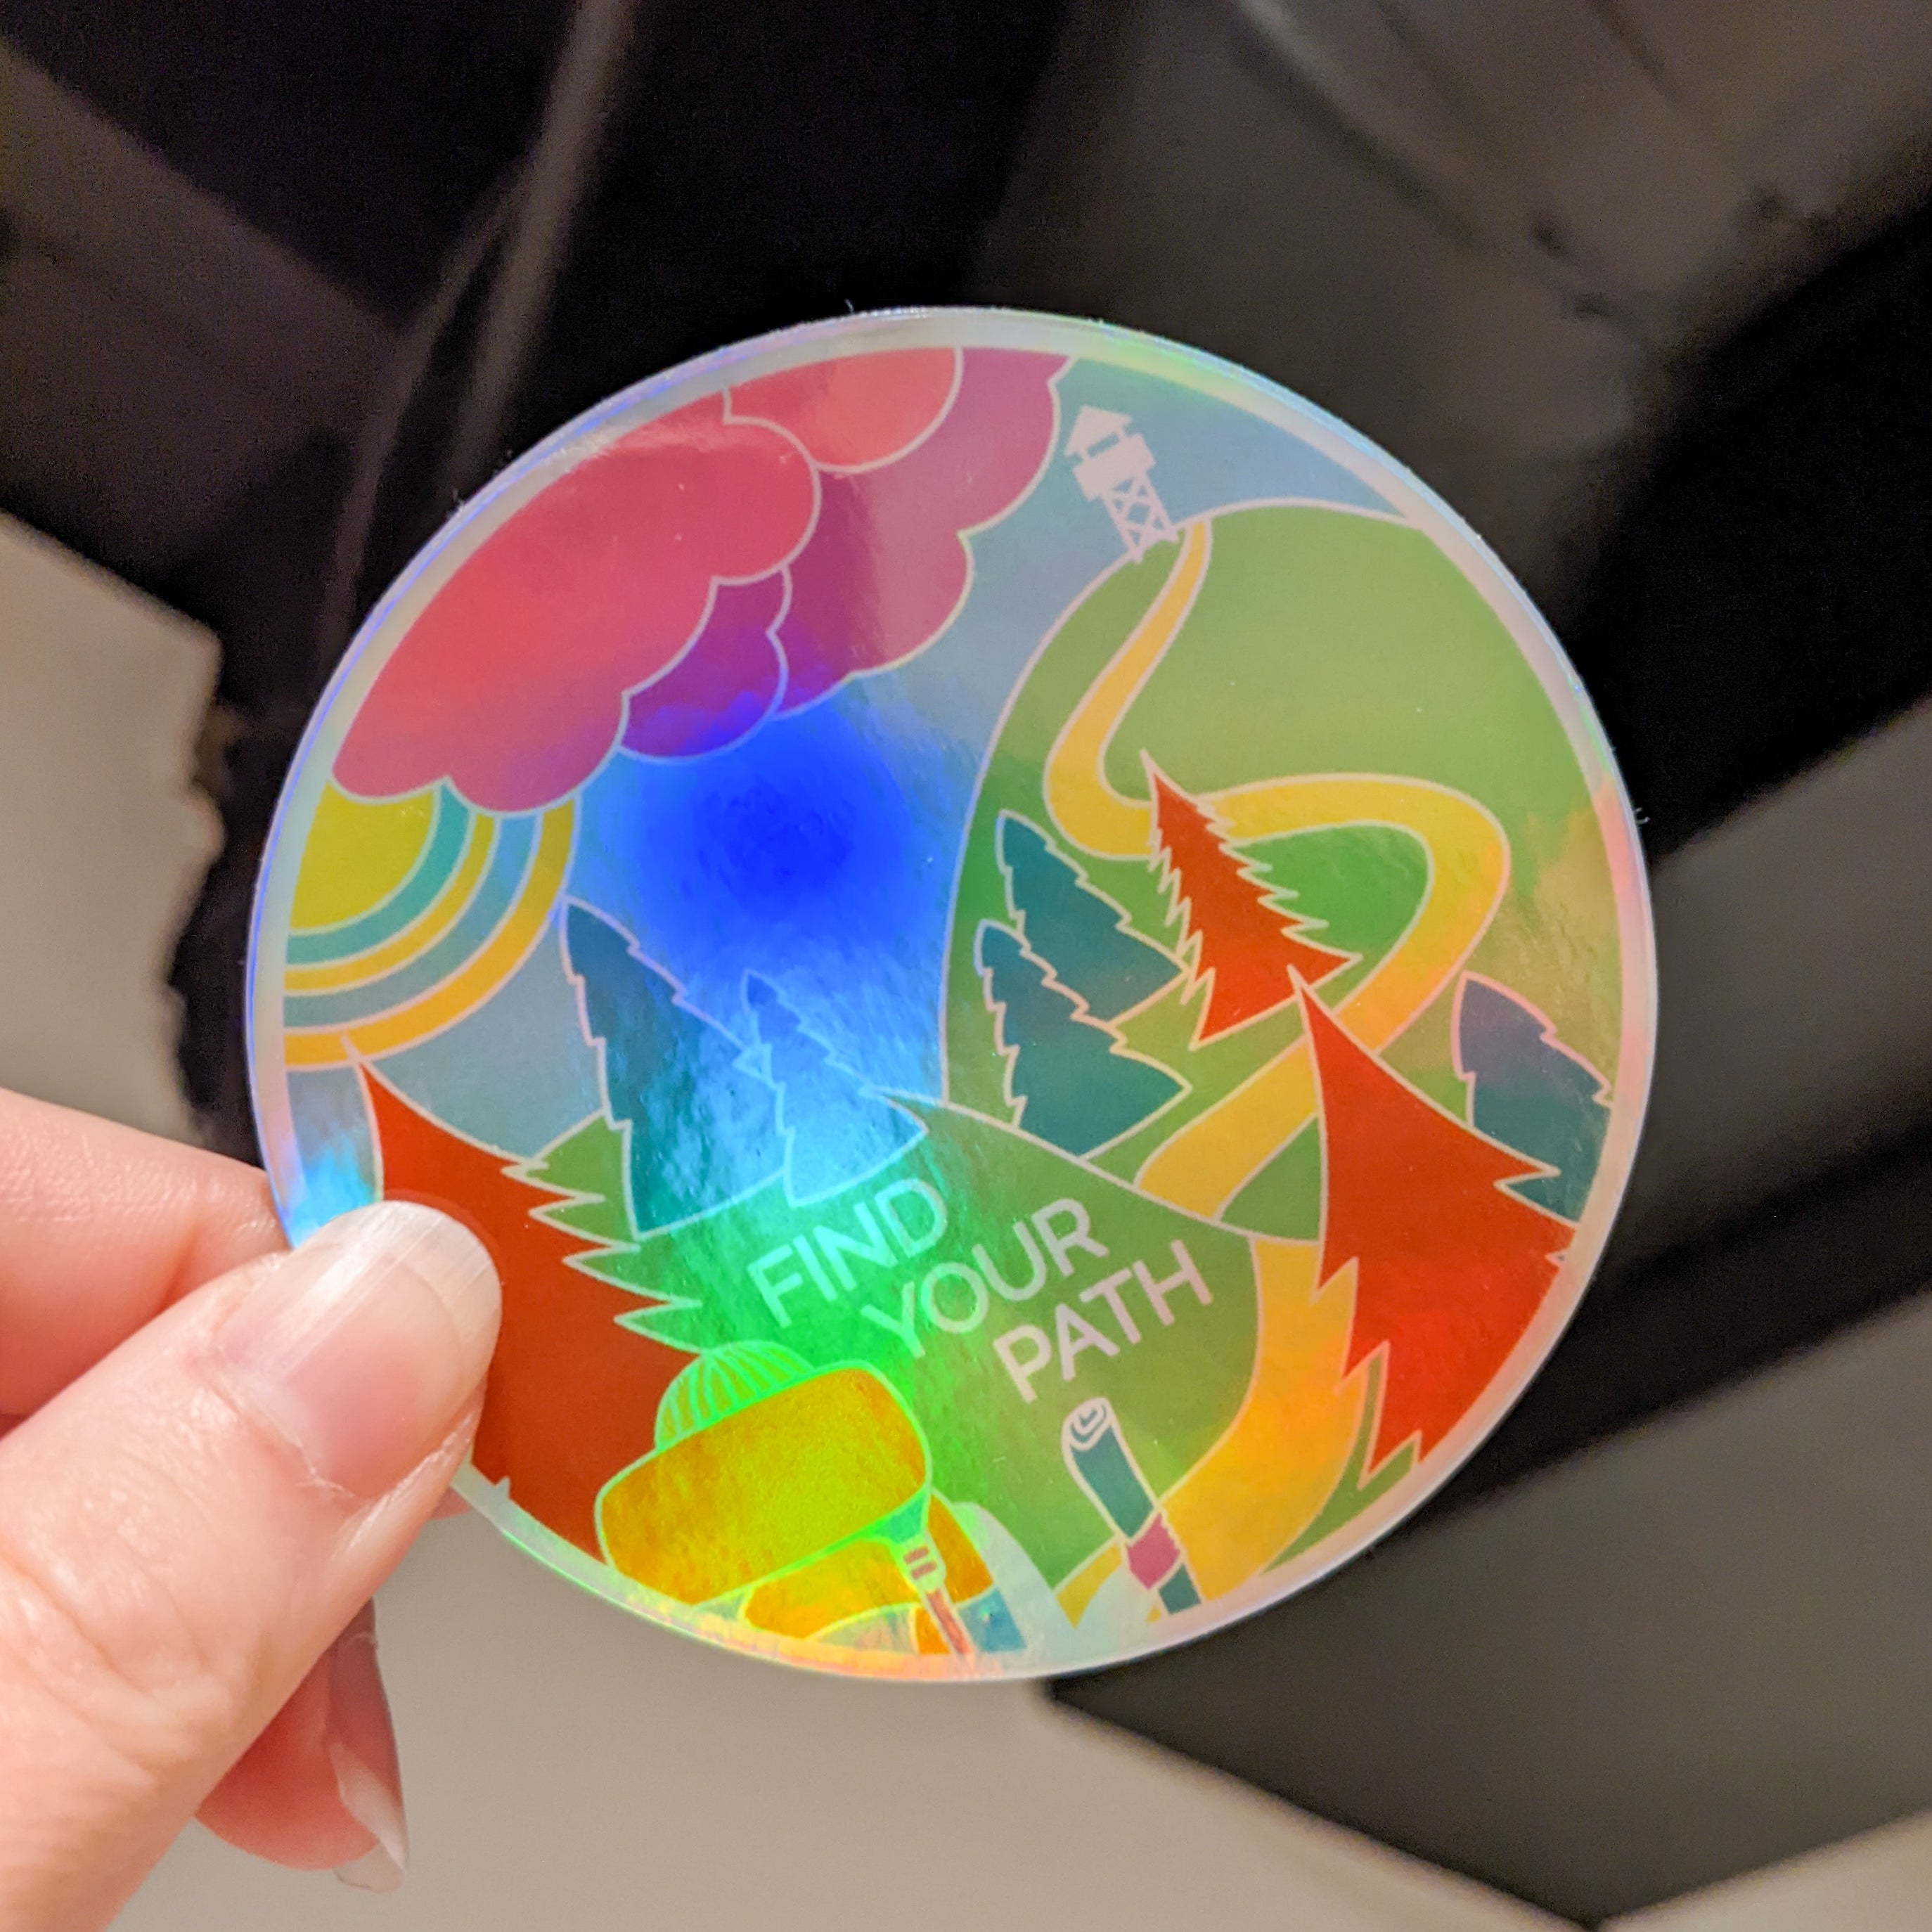 Find Your Path sticker (rainbow / subtle LGBTQIA+ pride)